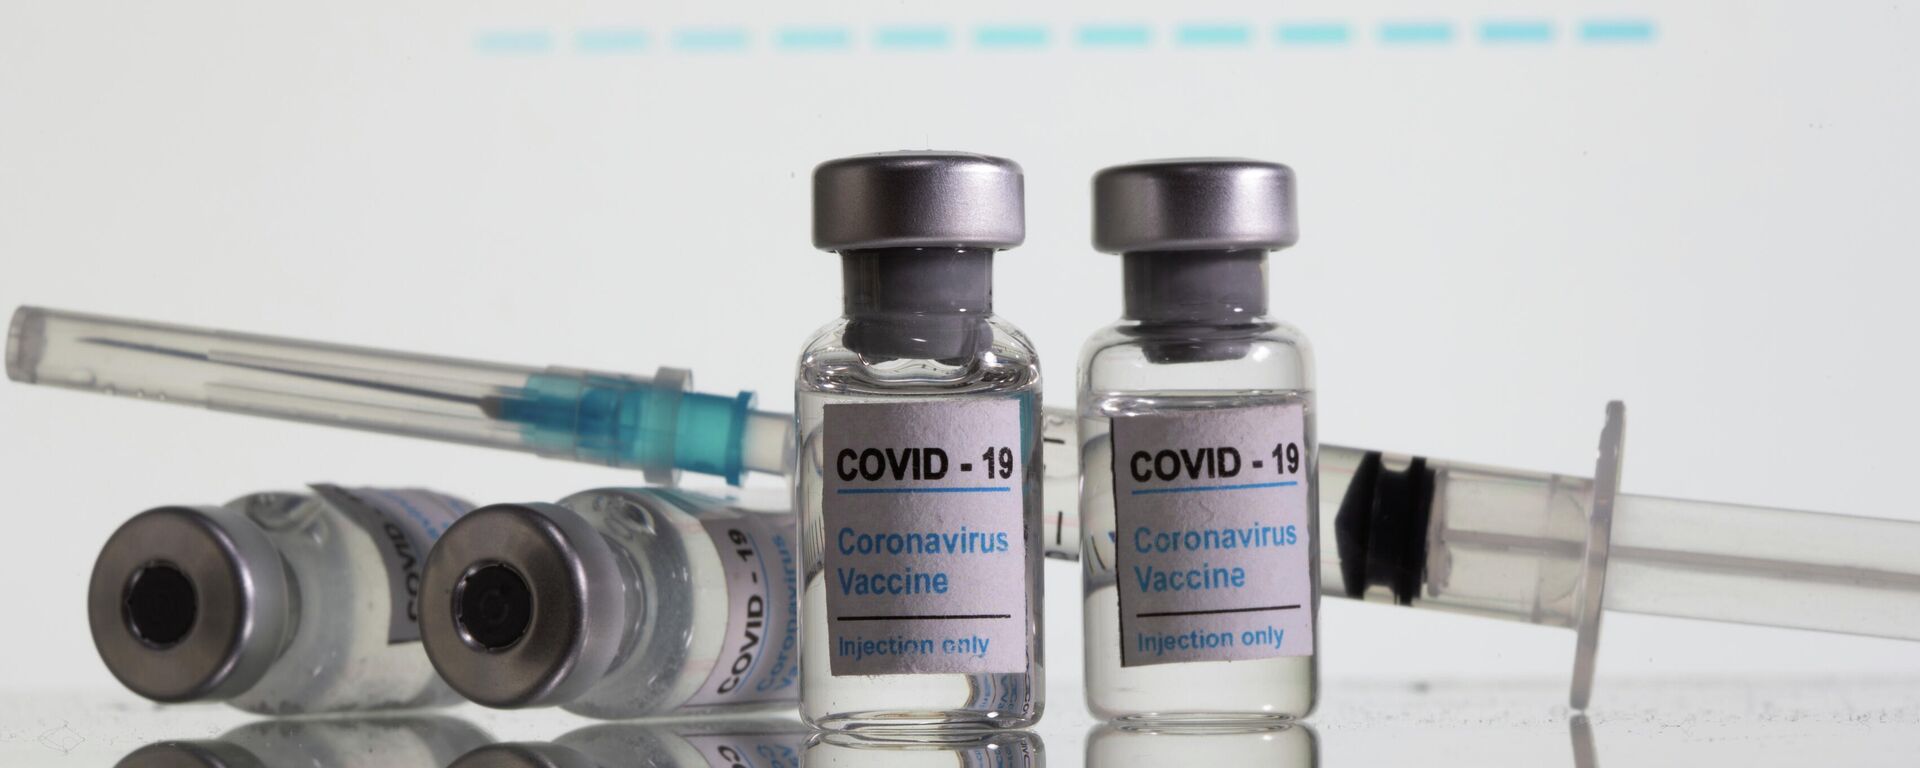 Viales de vacuna de Moderna contra el COVID-19 - Sputnik Mundo, 1920, 25.07.2021